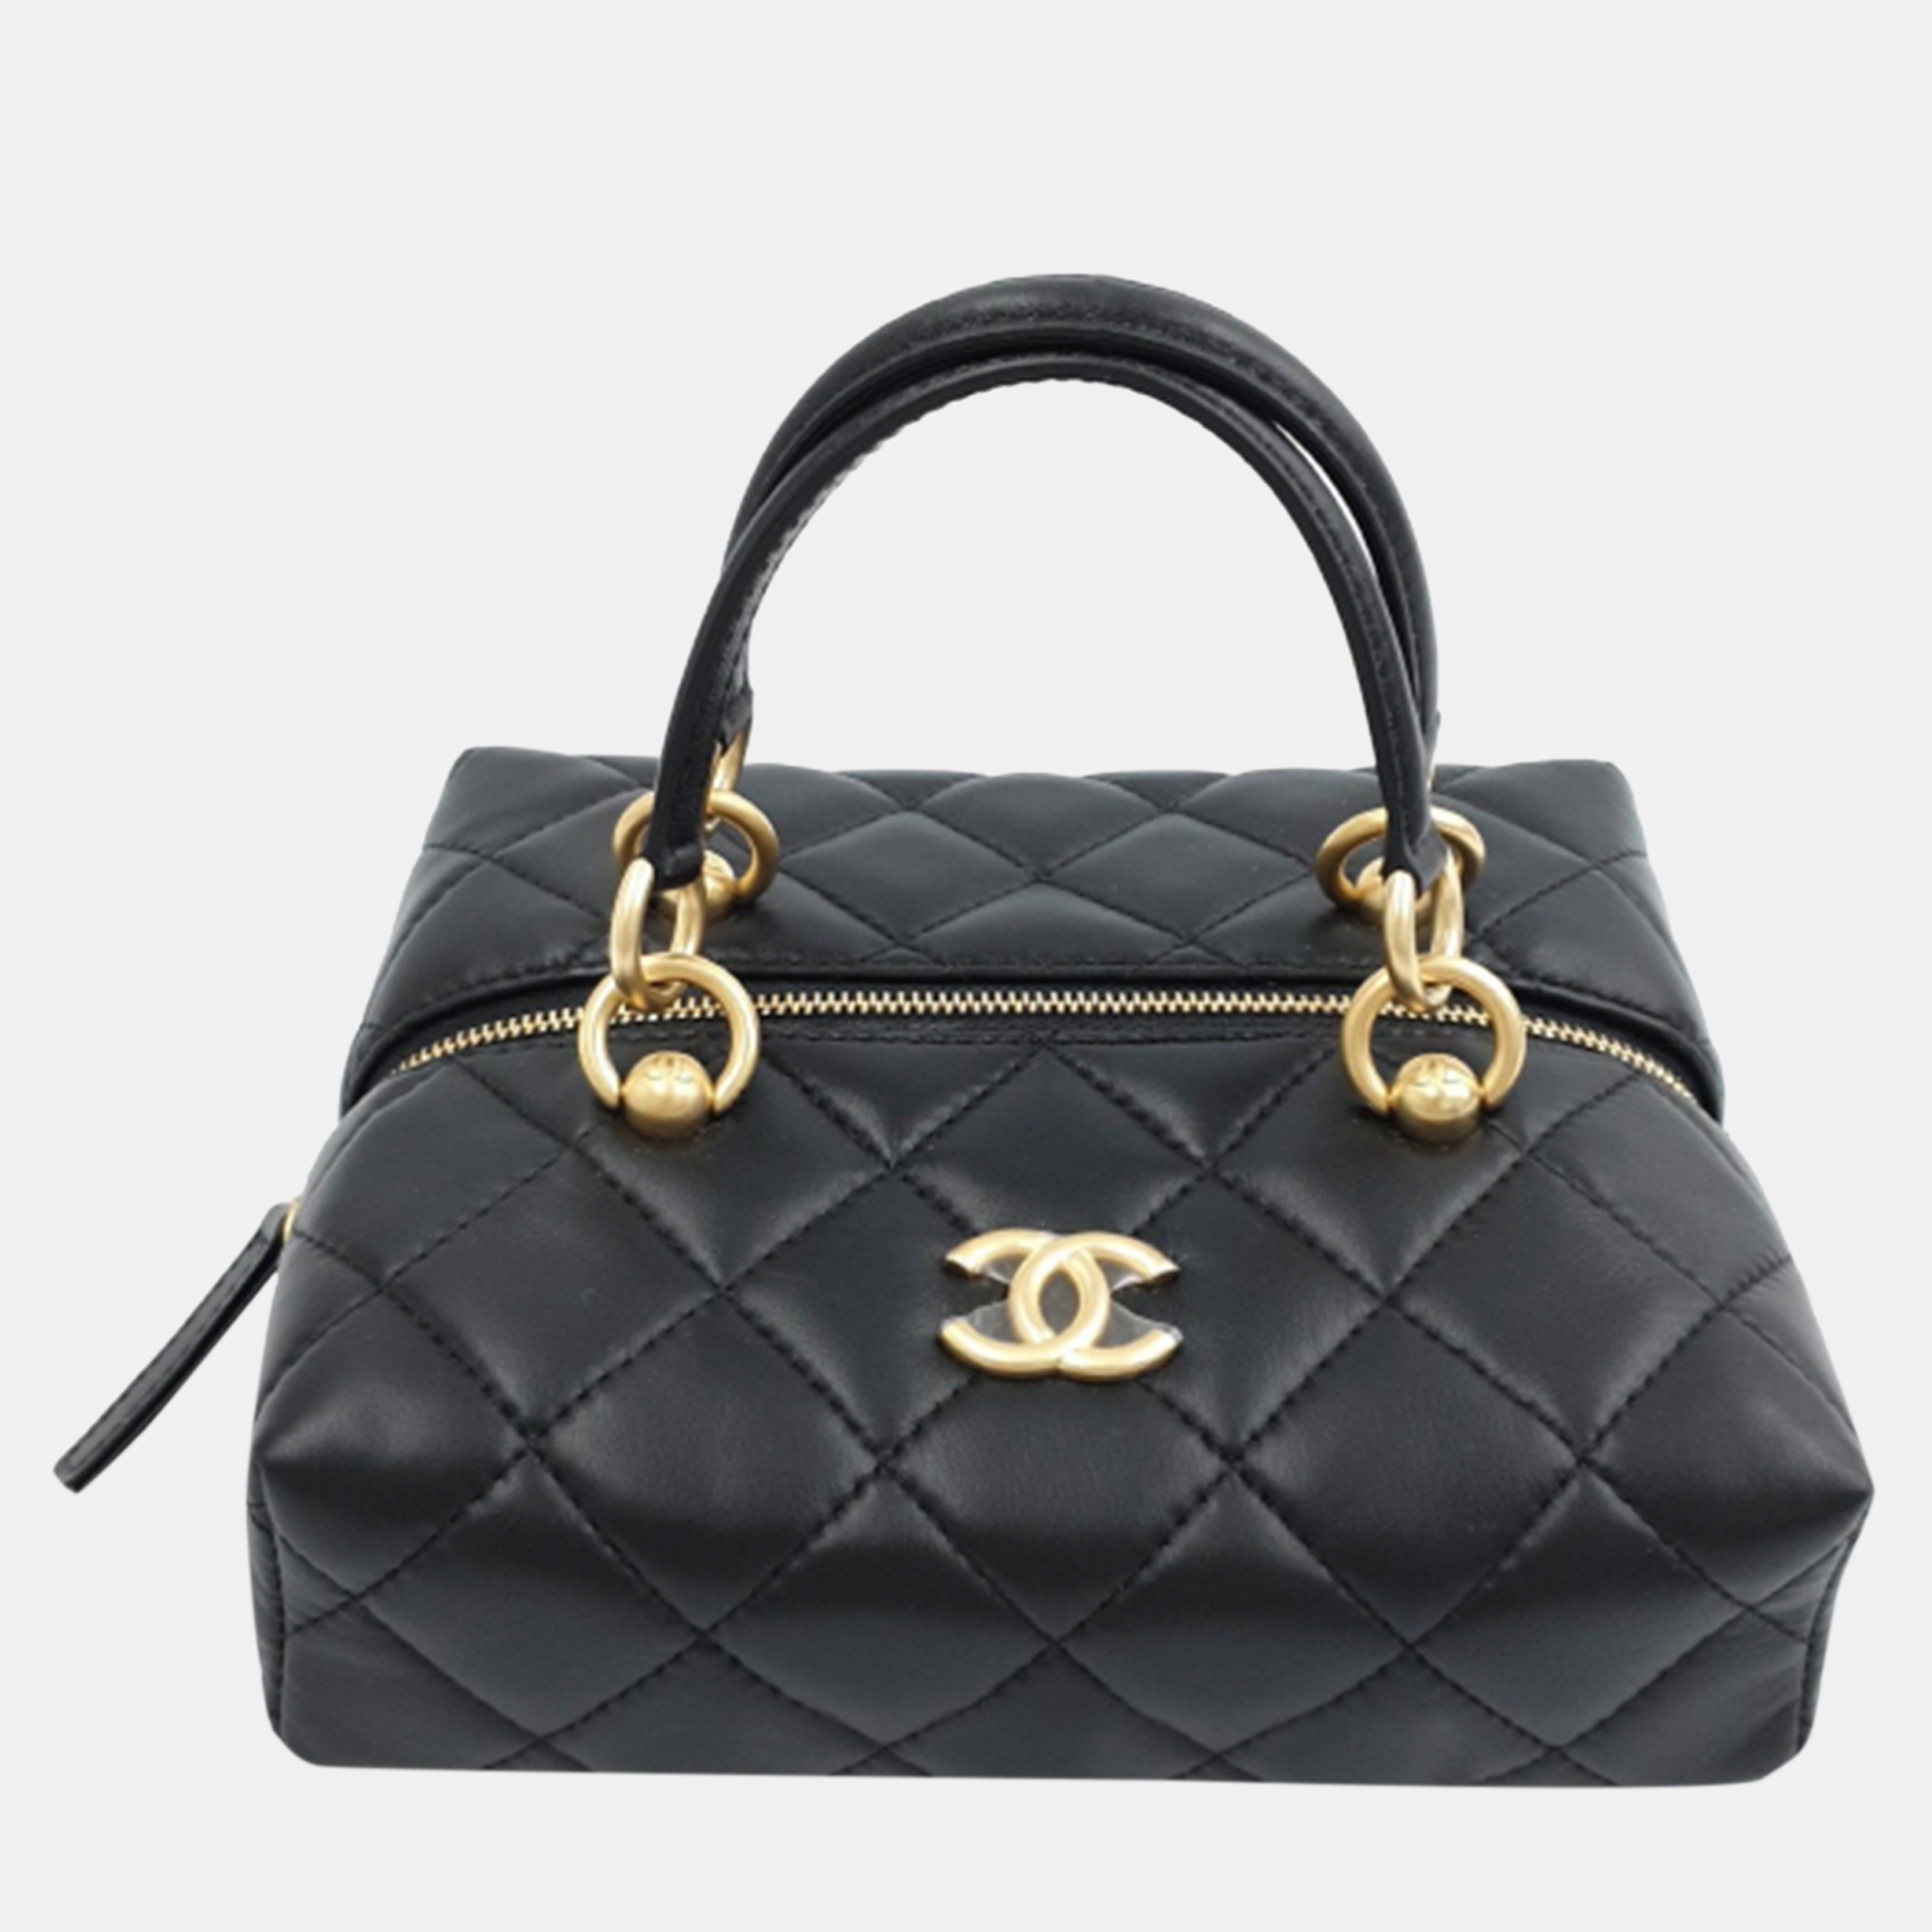 Chanel tote and shoulder bag